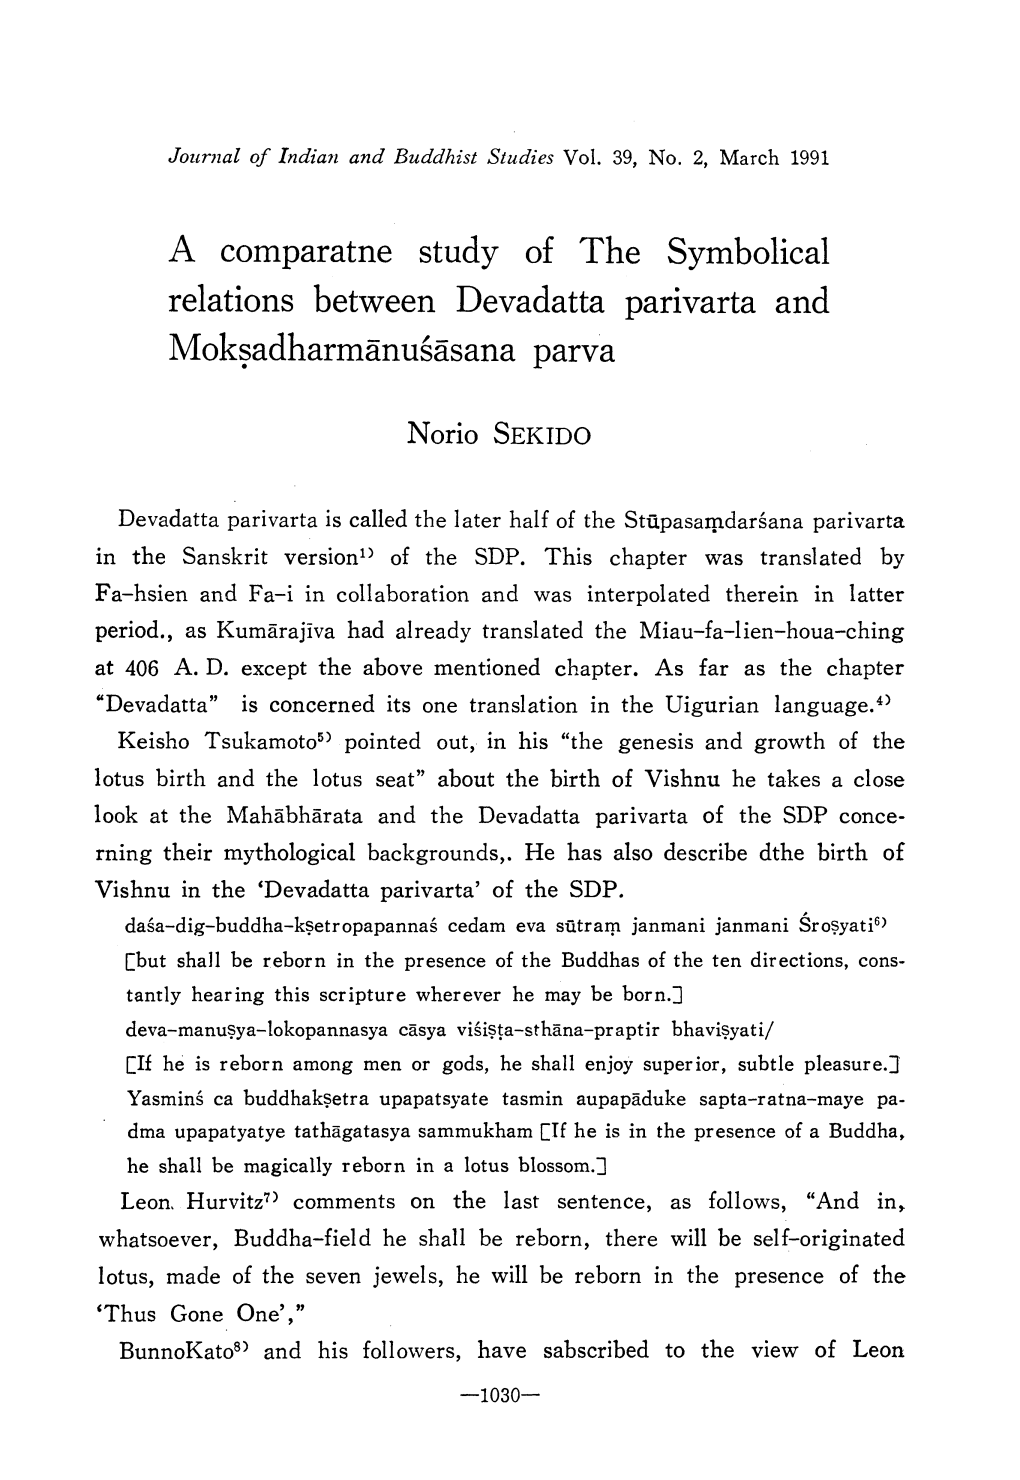 A Comparatne Study of the Symbolical Relations Between Devadatta Parivarta and Moksadharmanusasana Parva